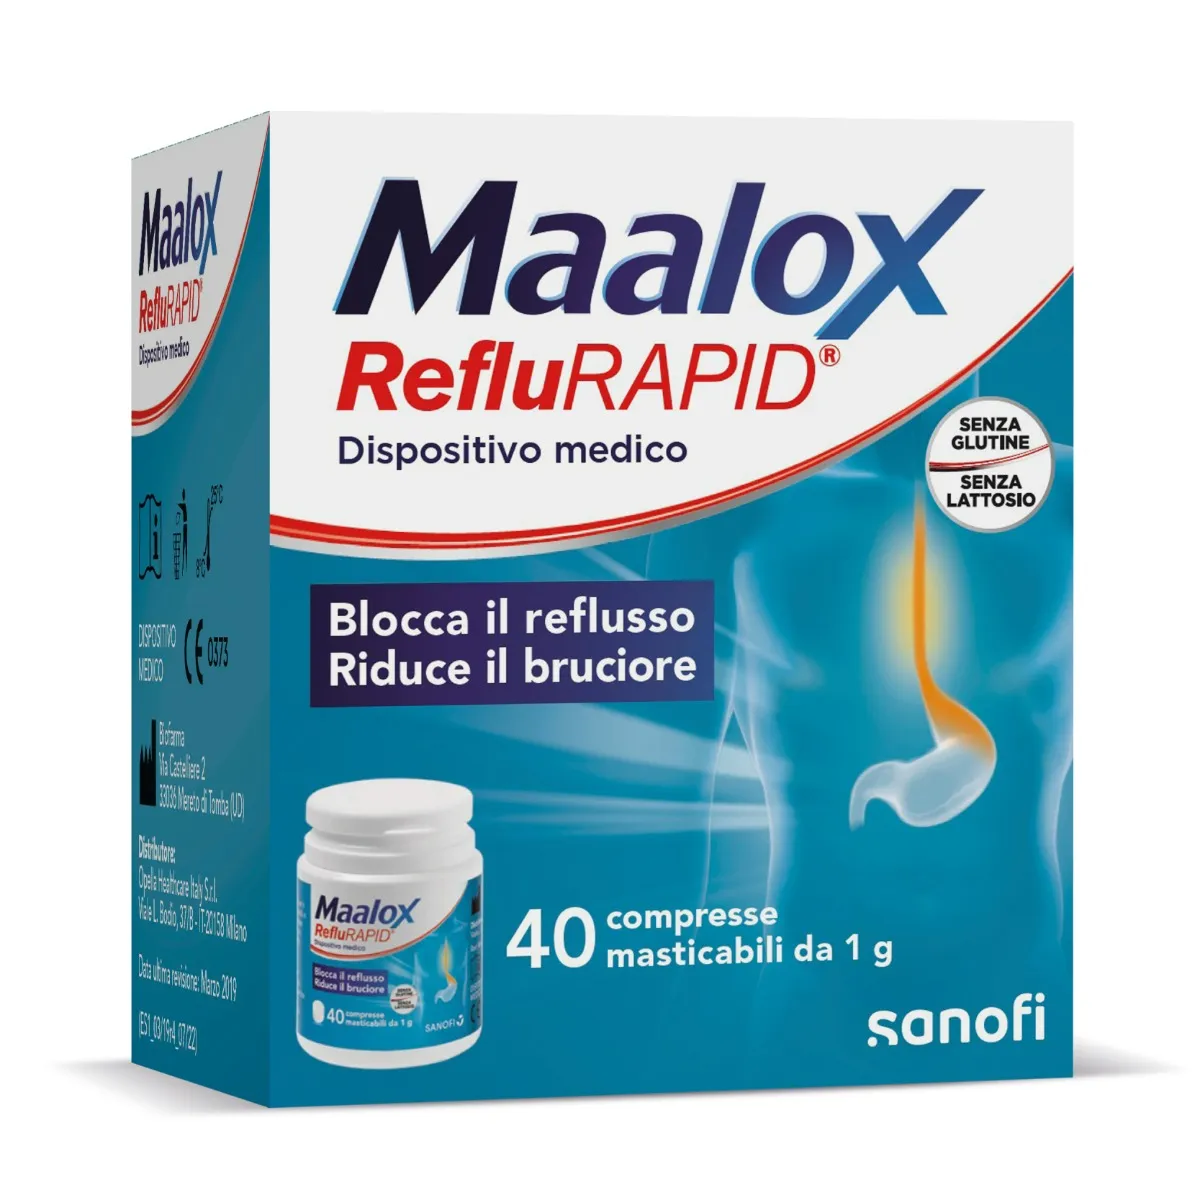 MAALOX REFLURAPID 40 COMPRESSE MASTIC